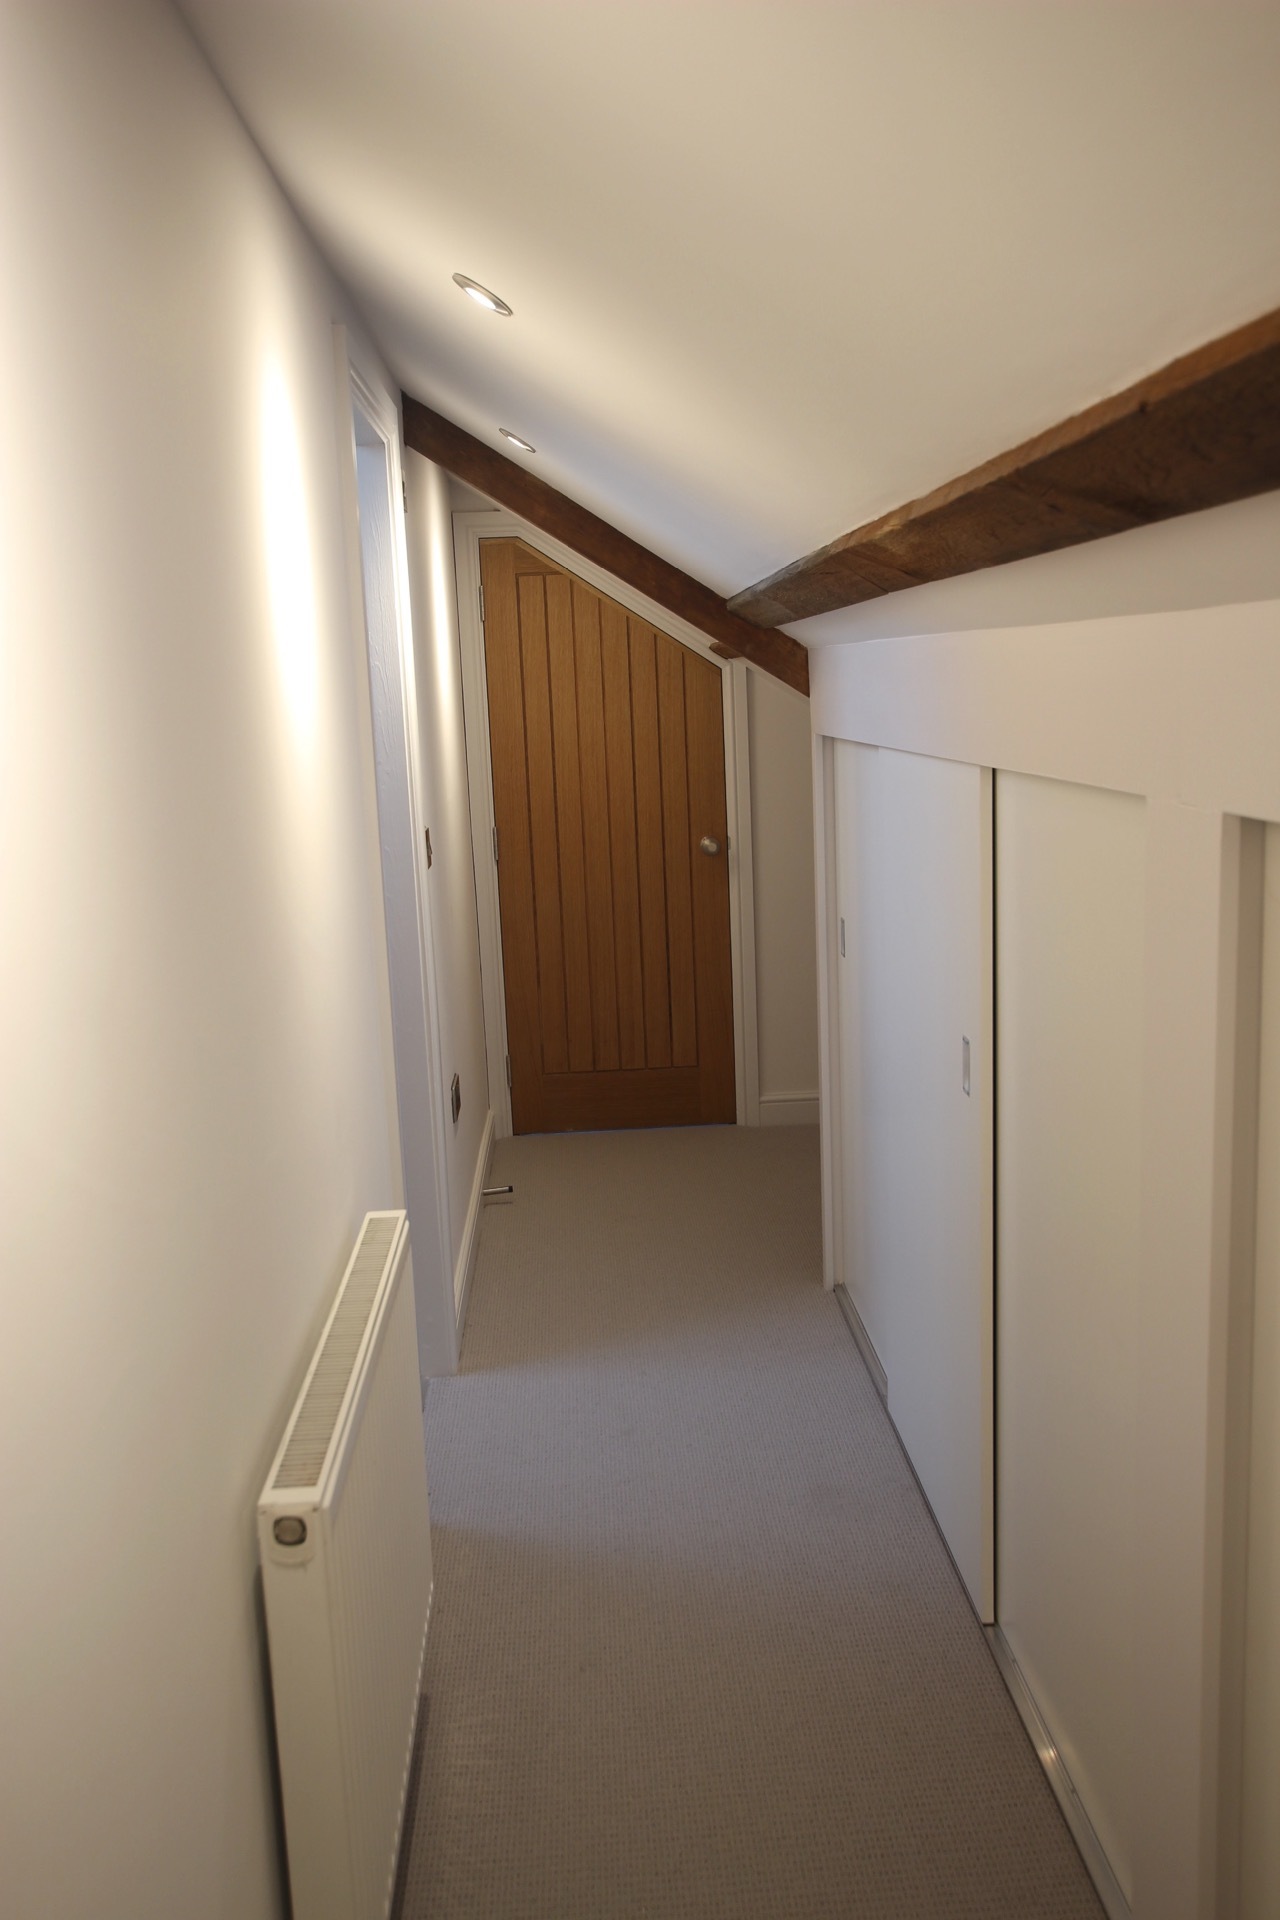 Hallway in loft conversion